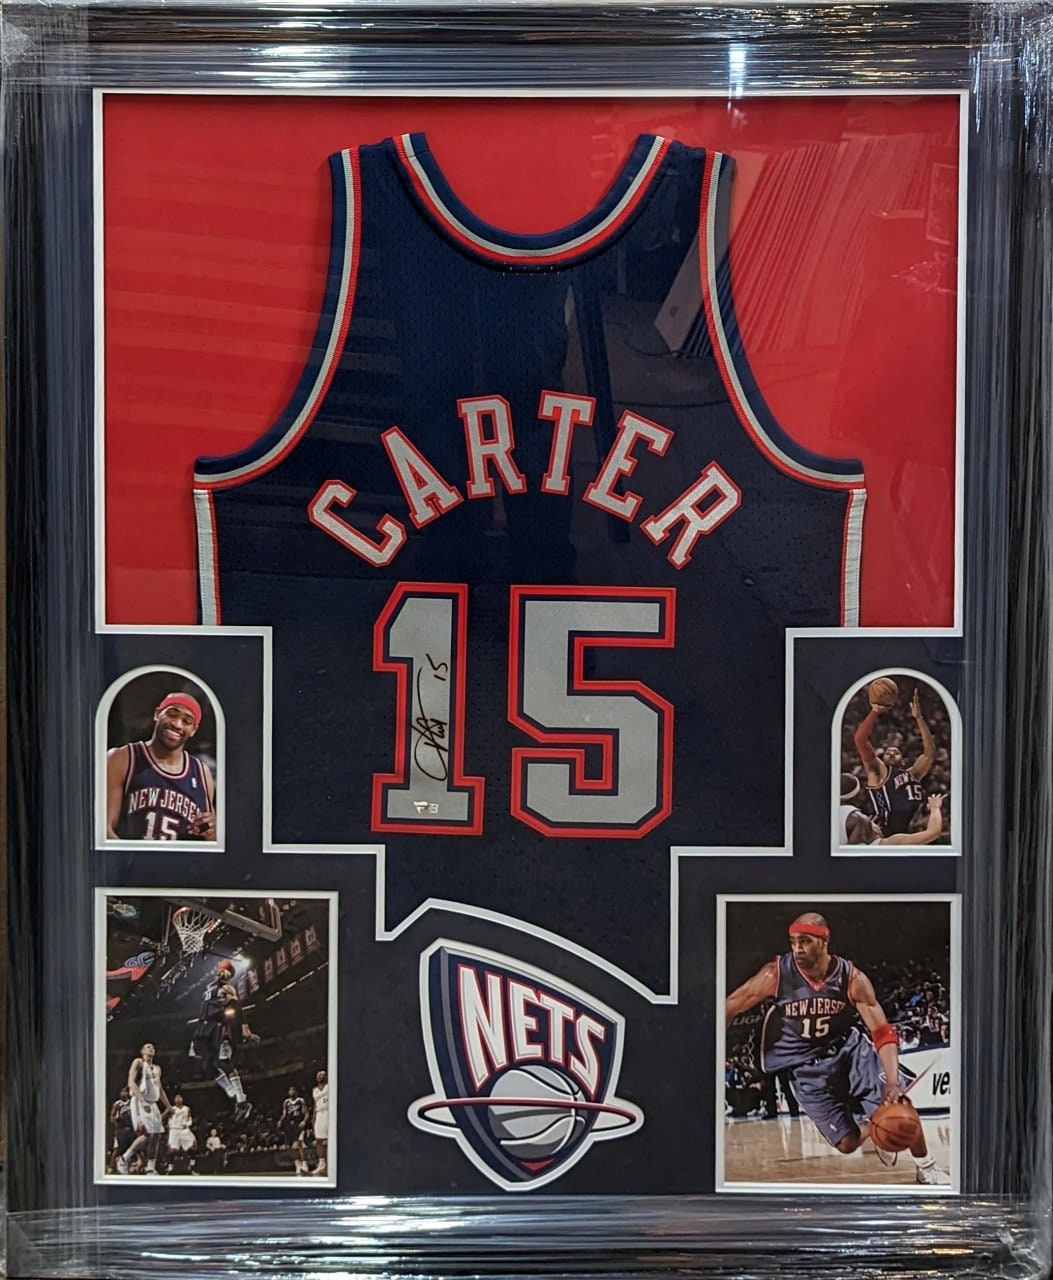 Vince Carter Autographed New Jersey Nets Mitchell & Ness Blue Basketball  Jersey - Fanatics